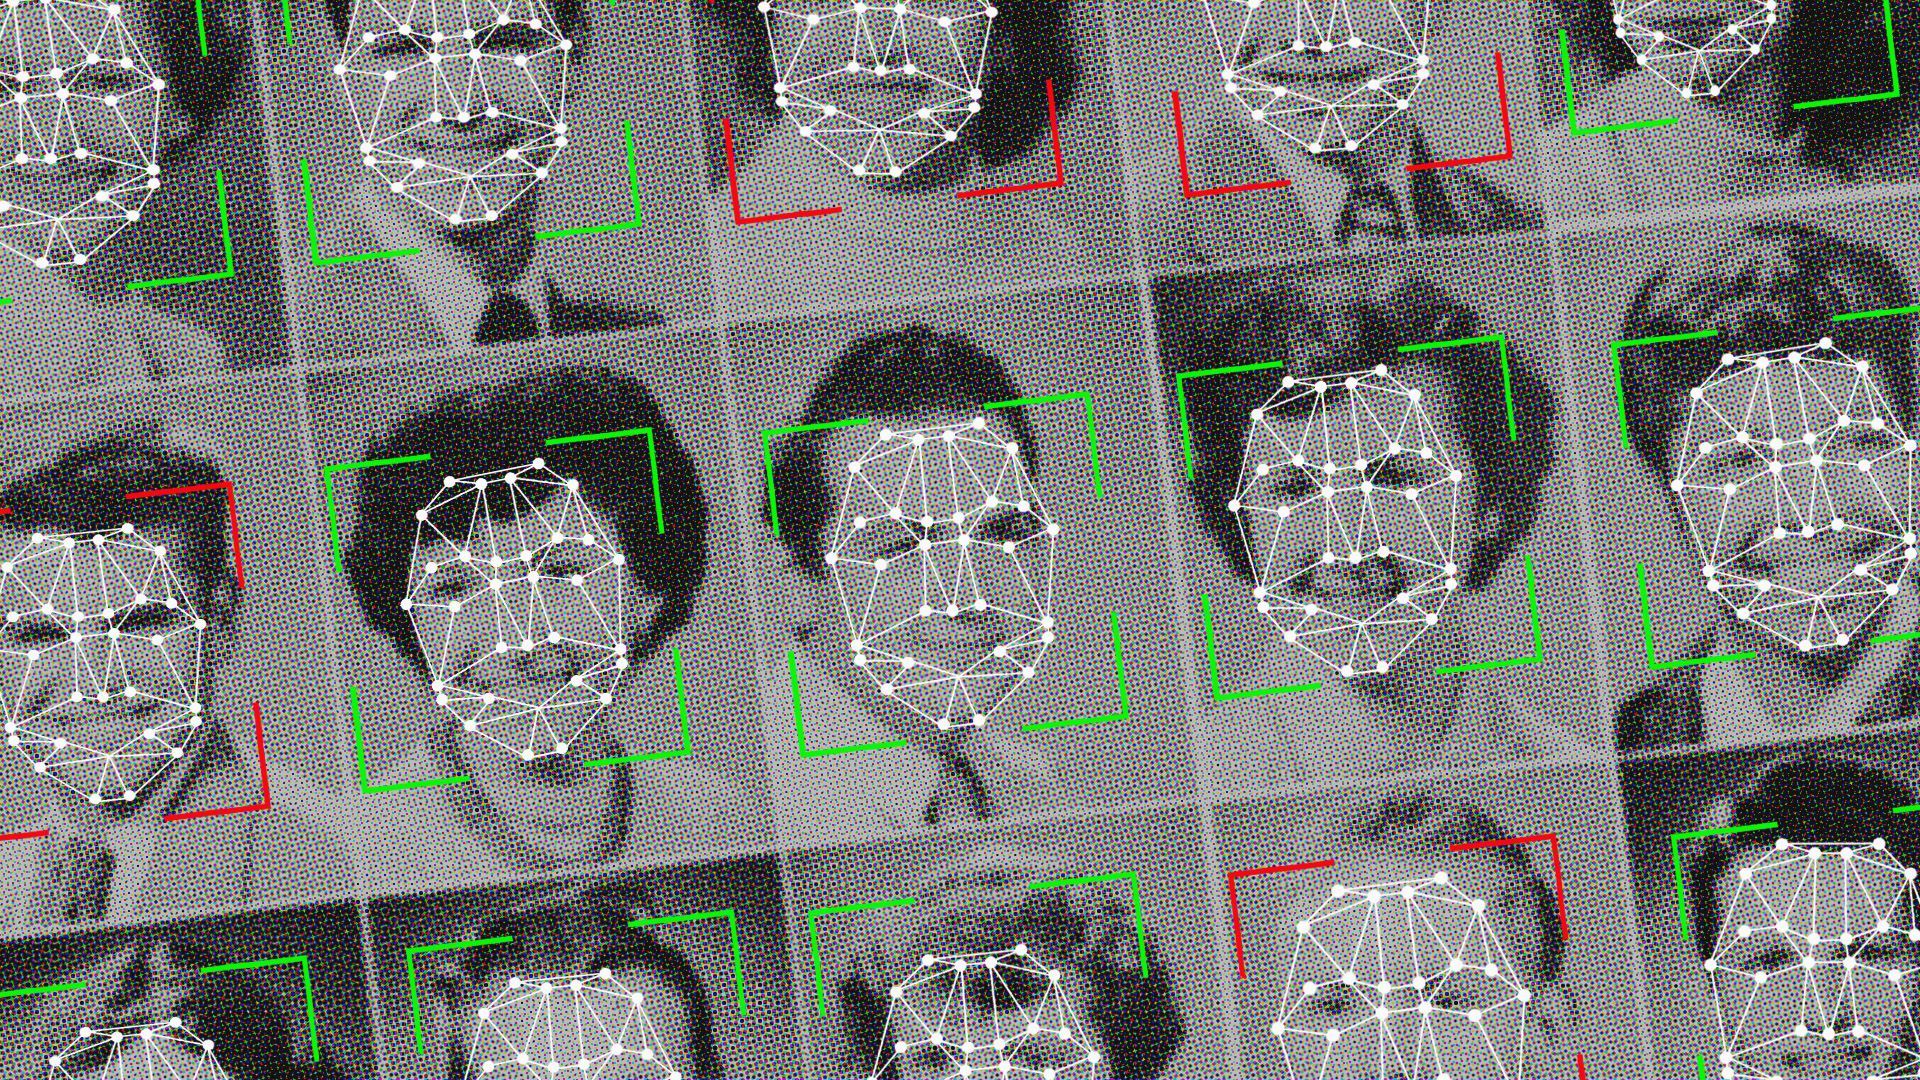 Facial recognition illustration